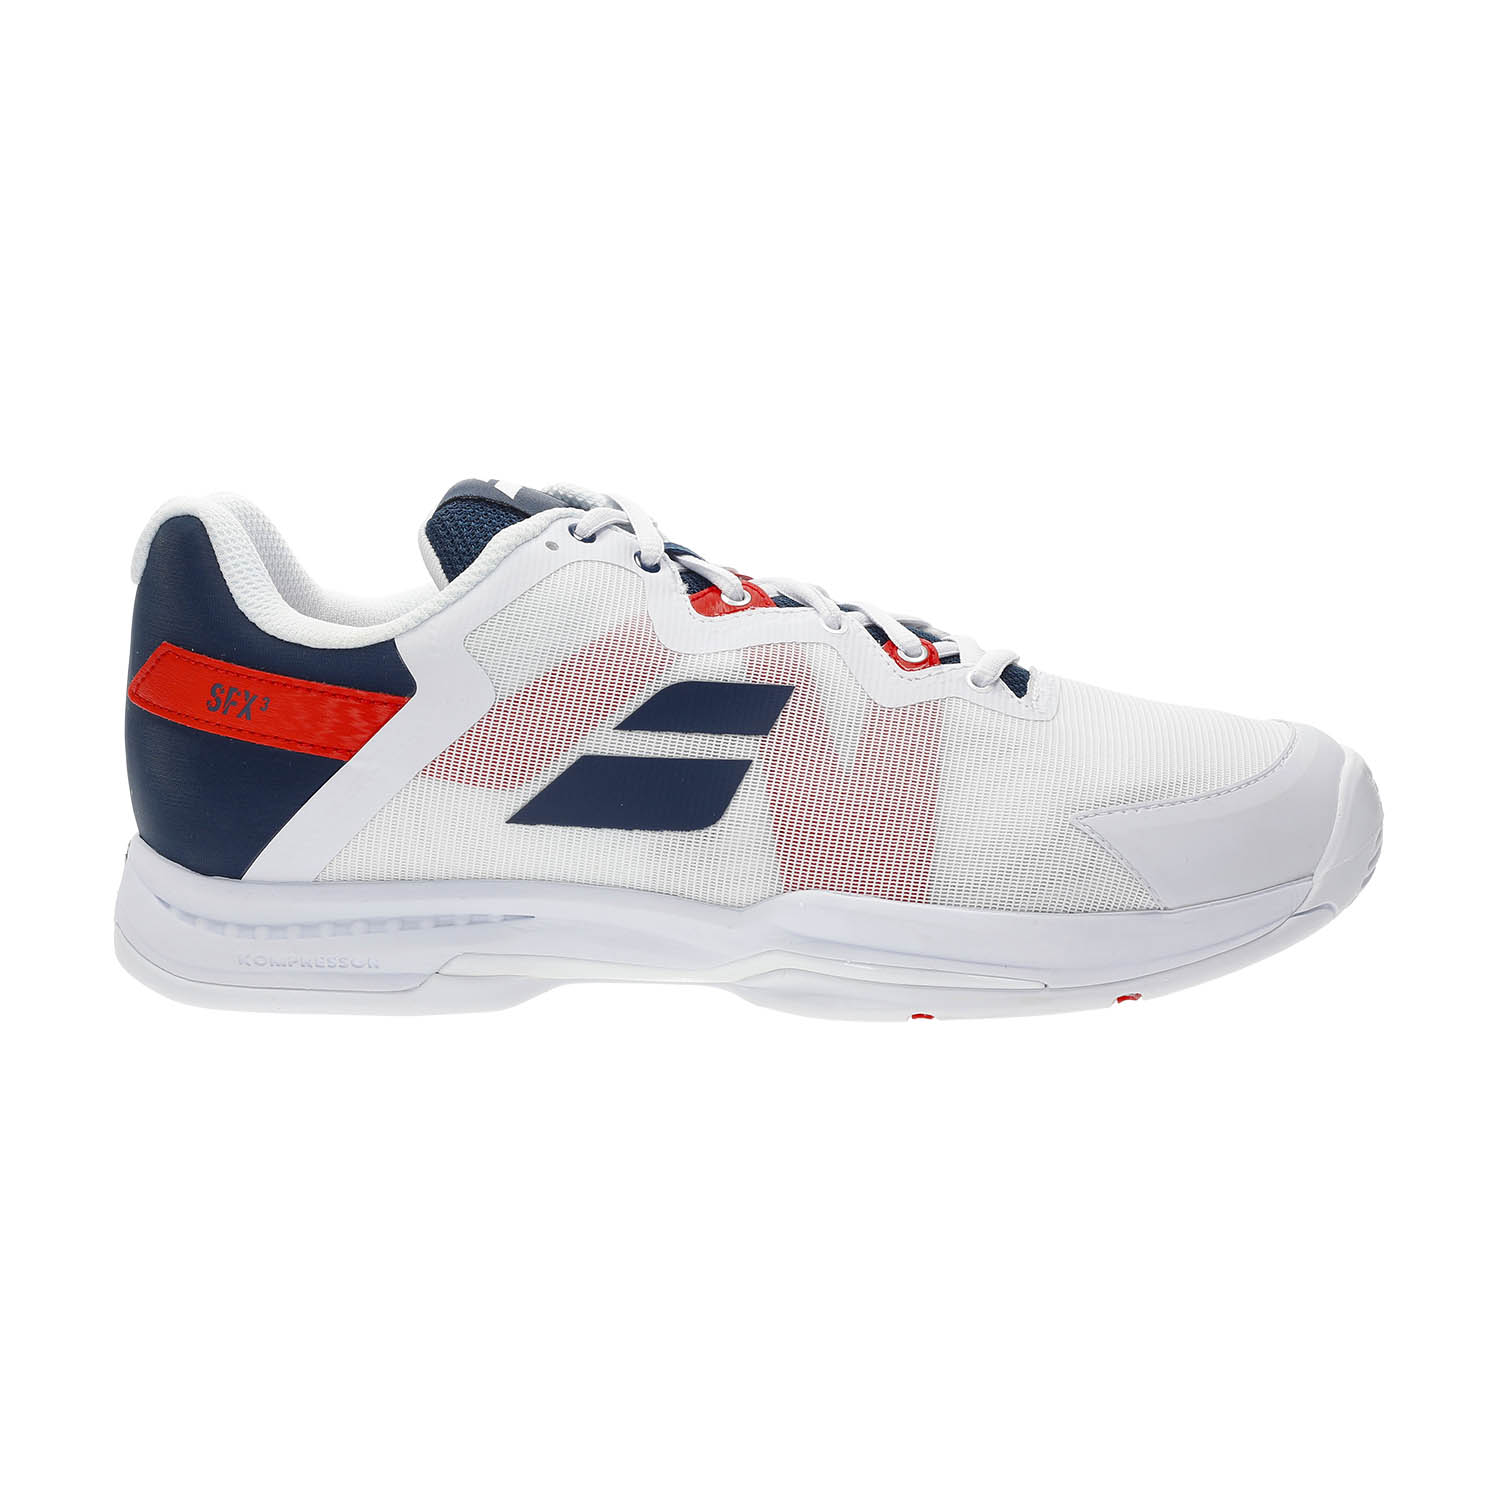 Babolat SFX3 All Court Men's Tennis Shoes Athletic White 30S20529 